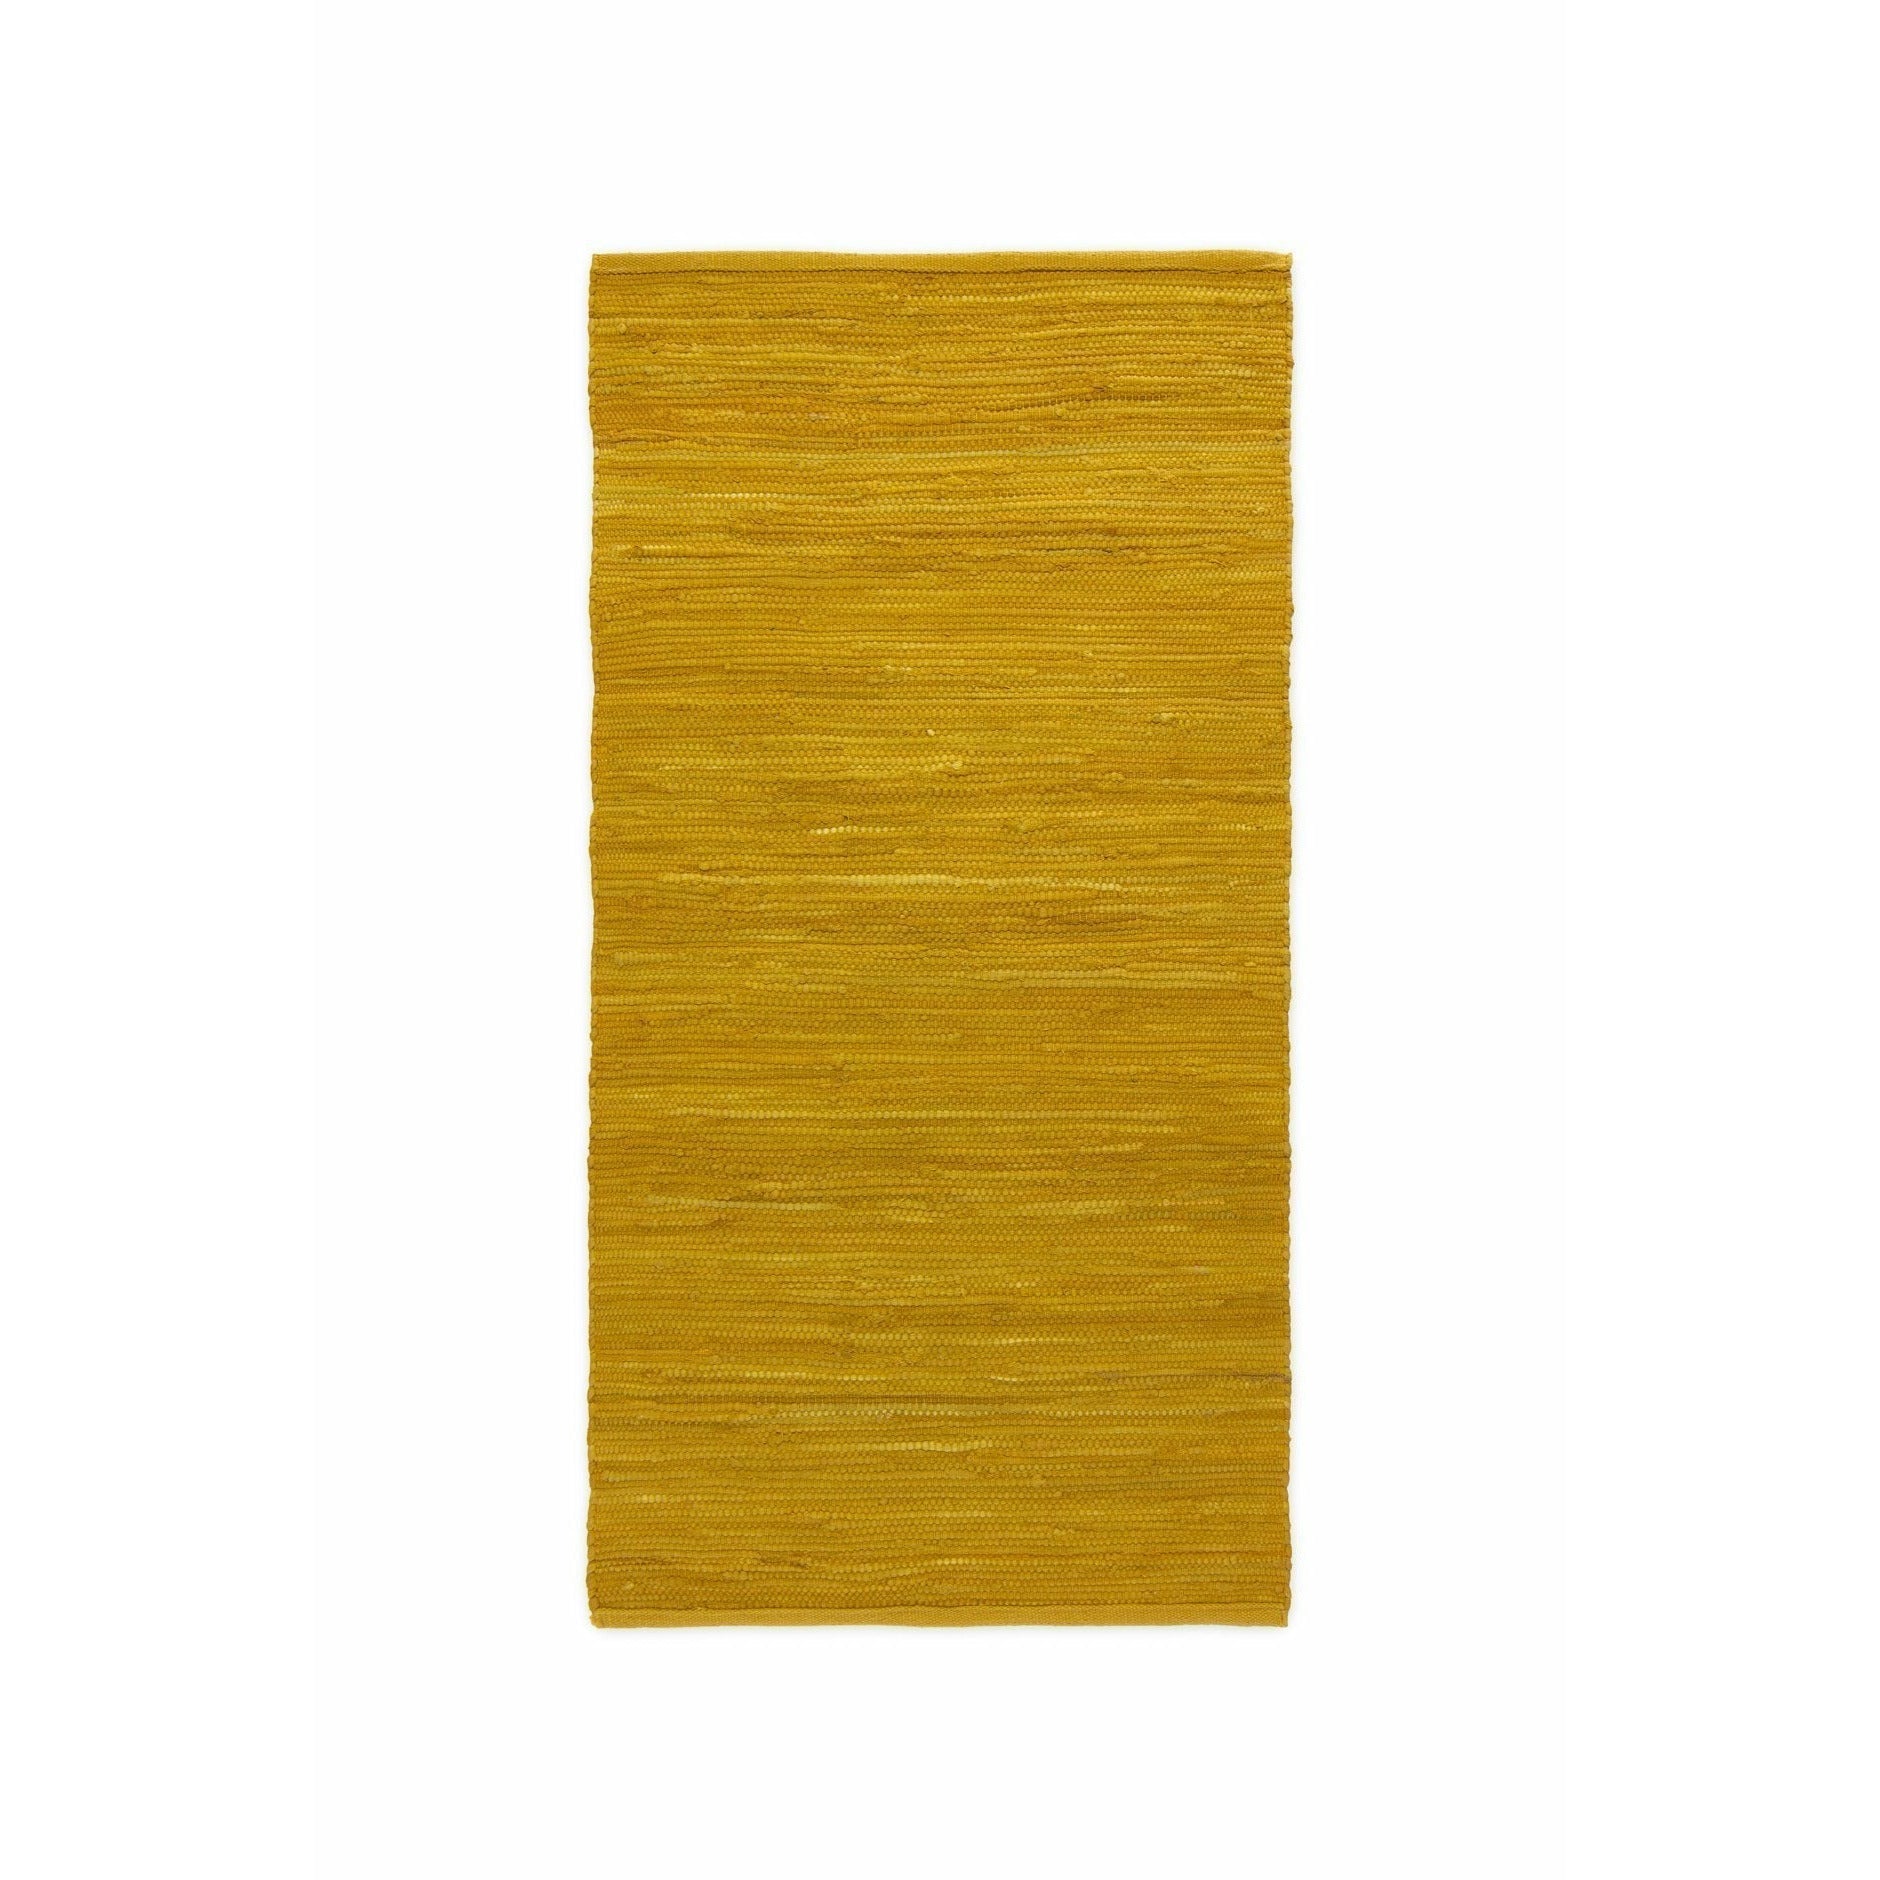 Rug Solid Tapis coton ambre brunis, 65 x 135 cm